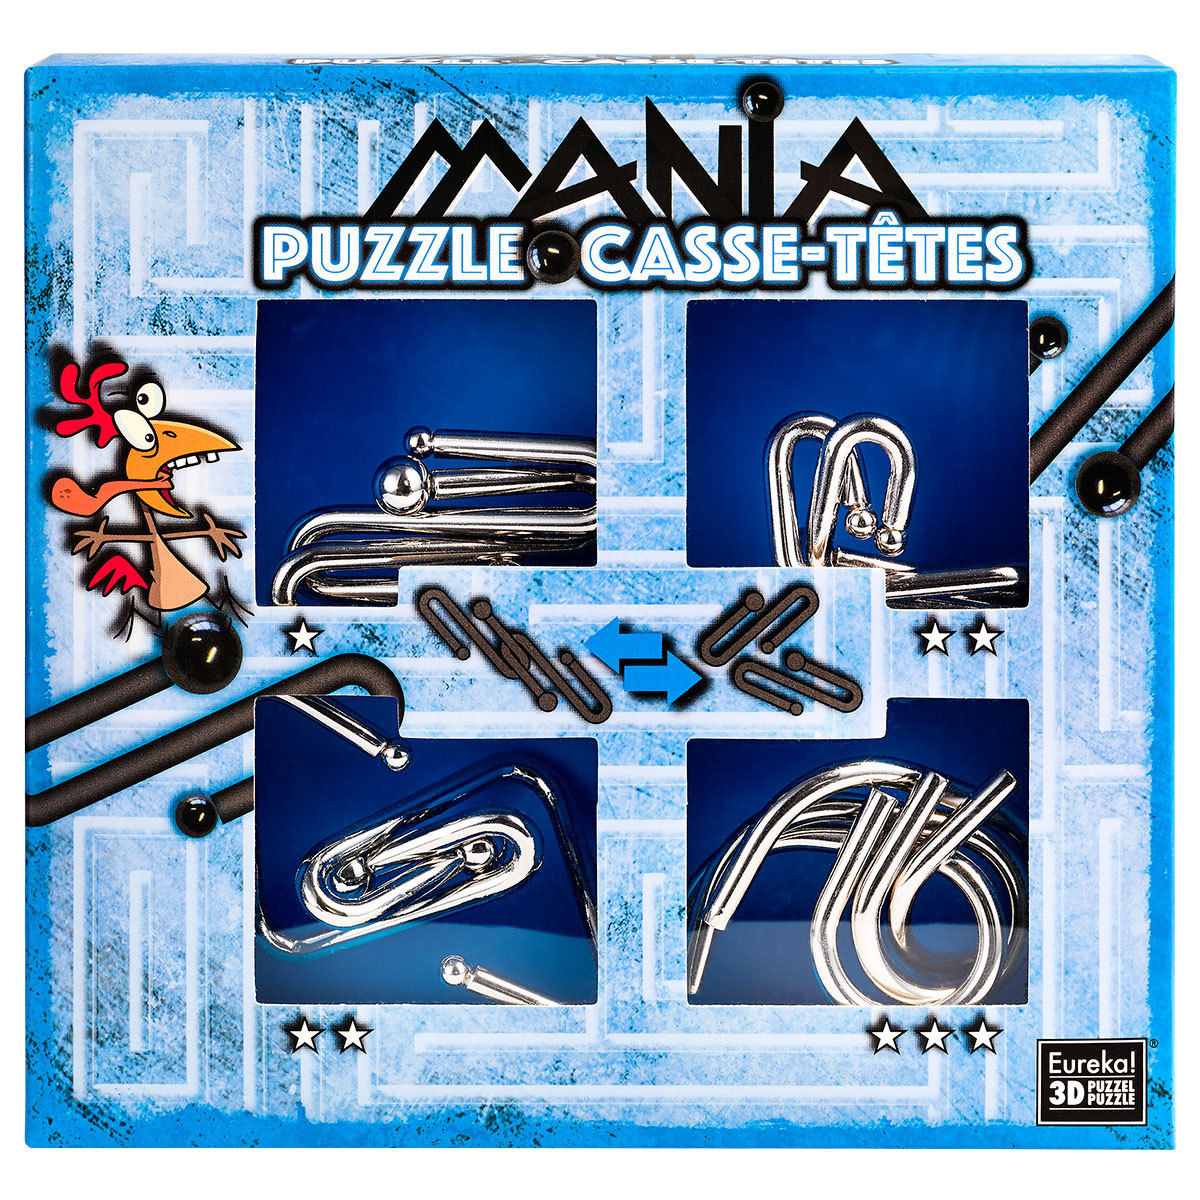 Display 52473200 erhältlich) im Mania EUREKA Casse-têtes Blau Puzzle - Puzzle (nur